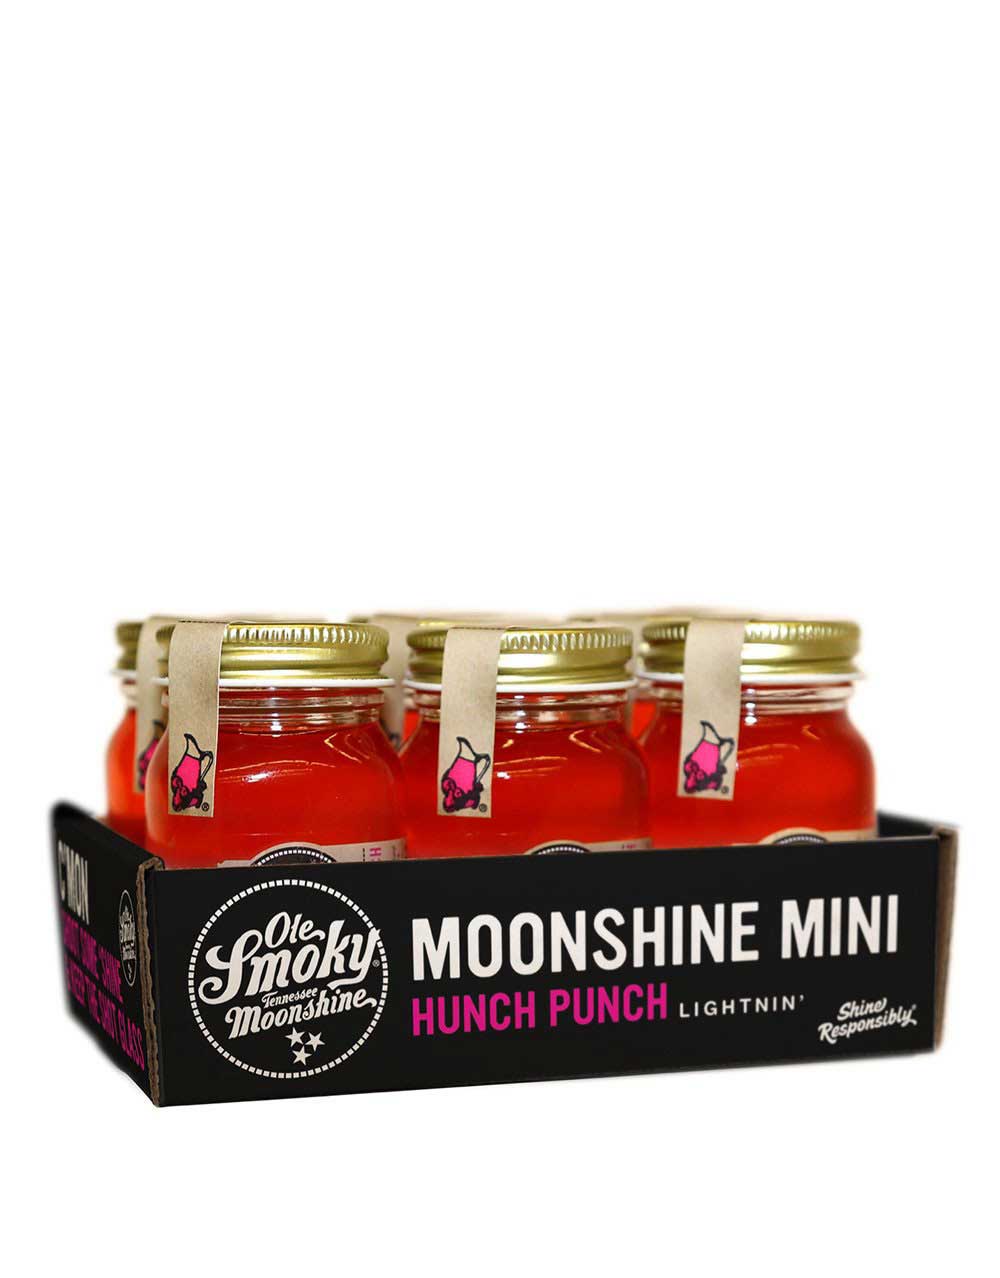 Ole Smoky Hunch Punch Moonshine Minis